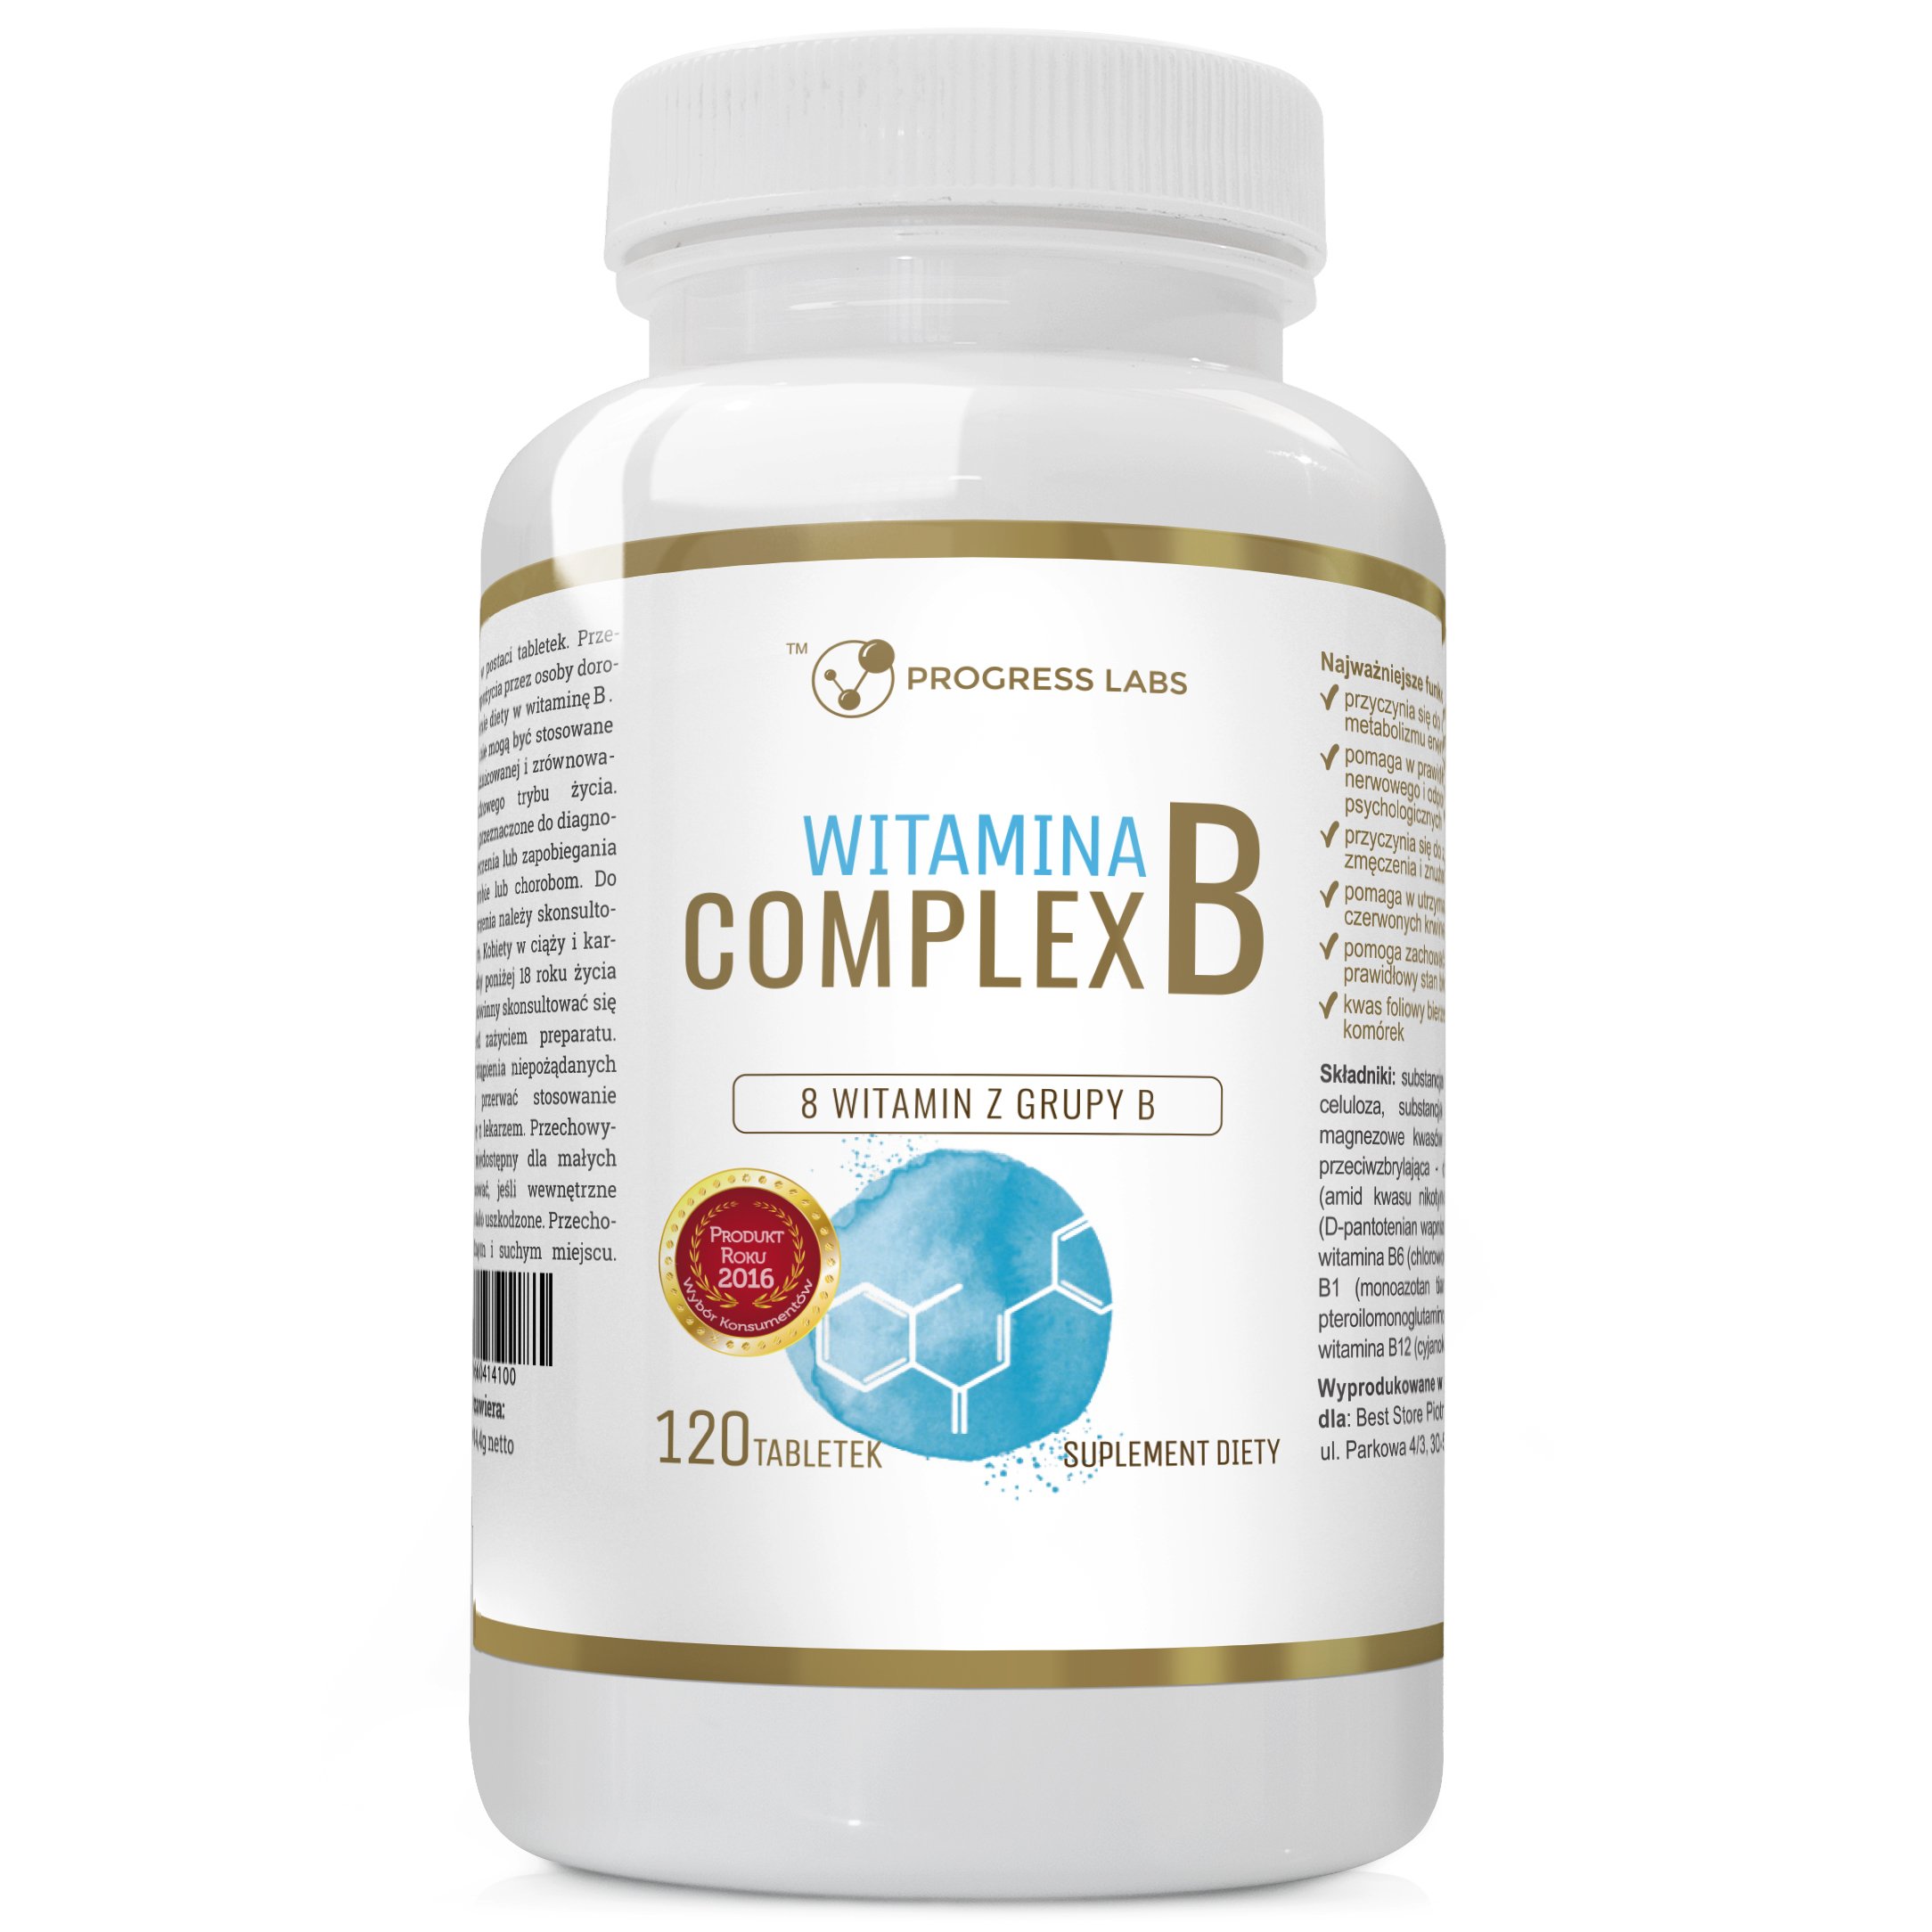 Витамины гр б. Комплекс витамины в 1 6 12 в таблетках. Комплекс витаминов в1, в6, в3. Витаминный комплекс b6 b9 b12. Витамины b1 b6 b9 b12 комплекс.